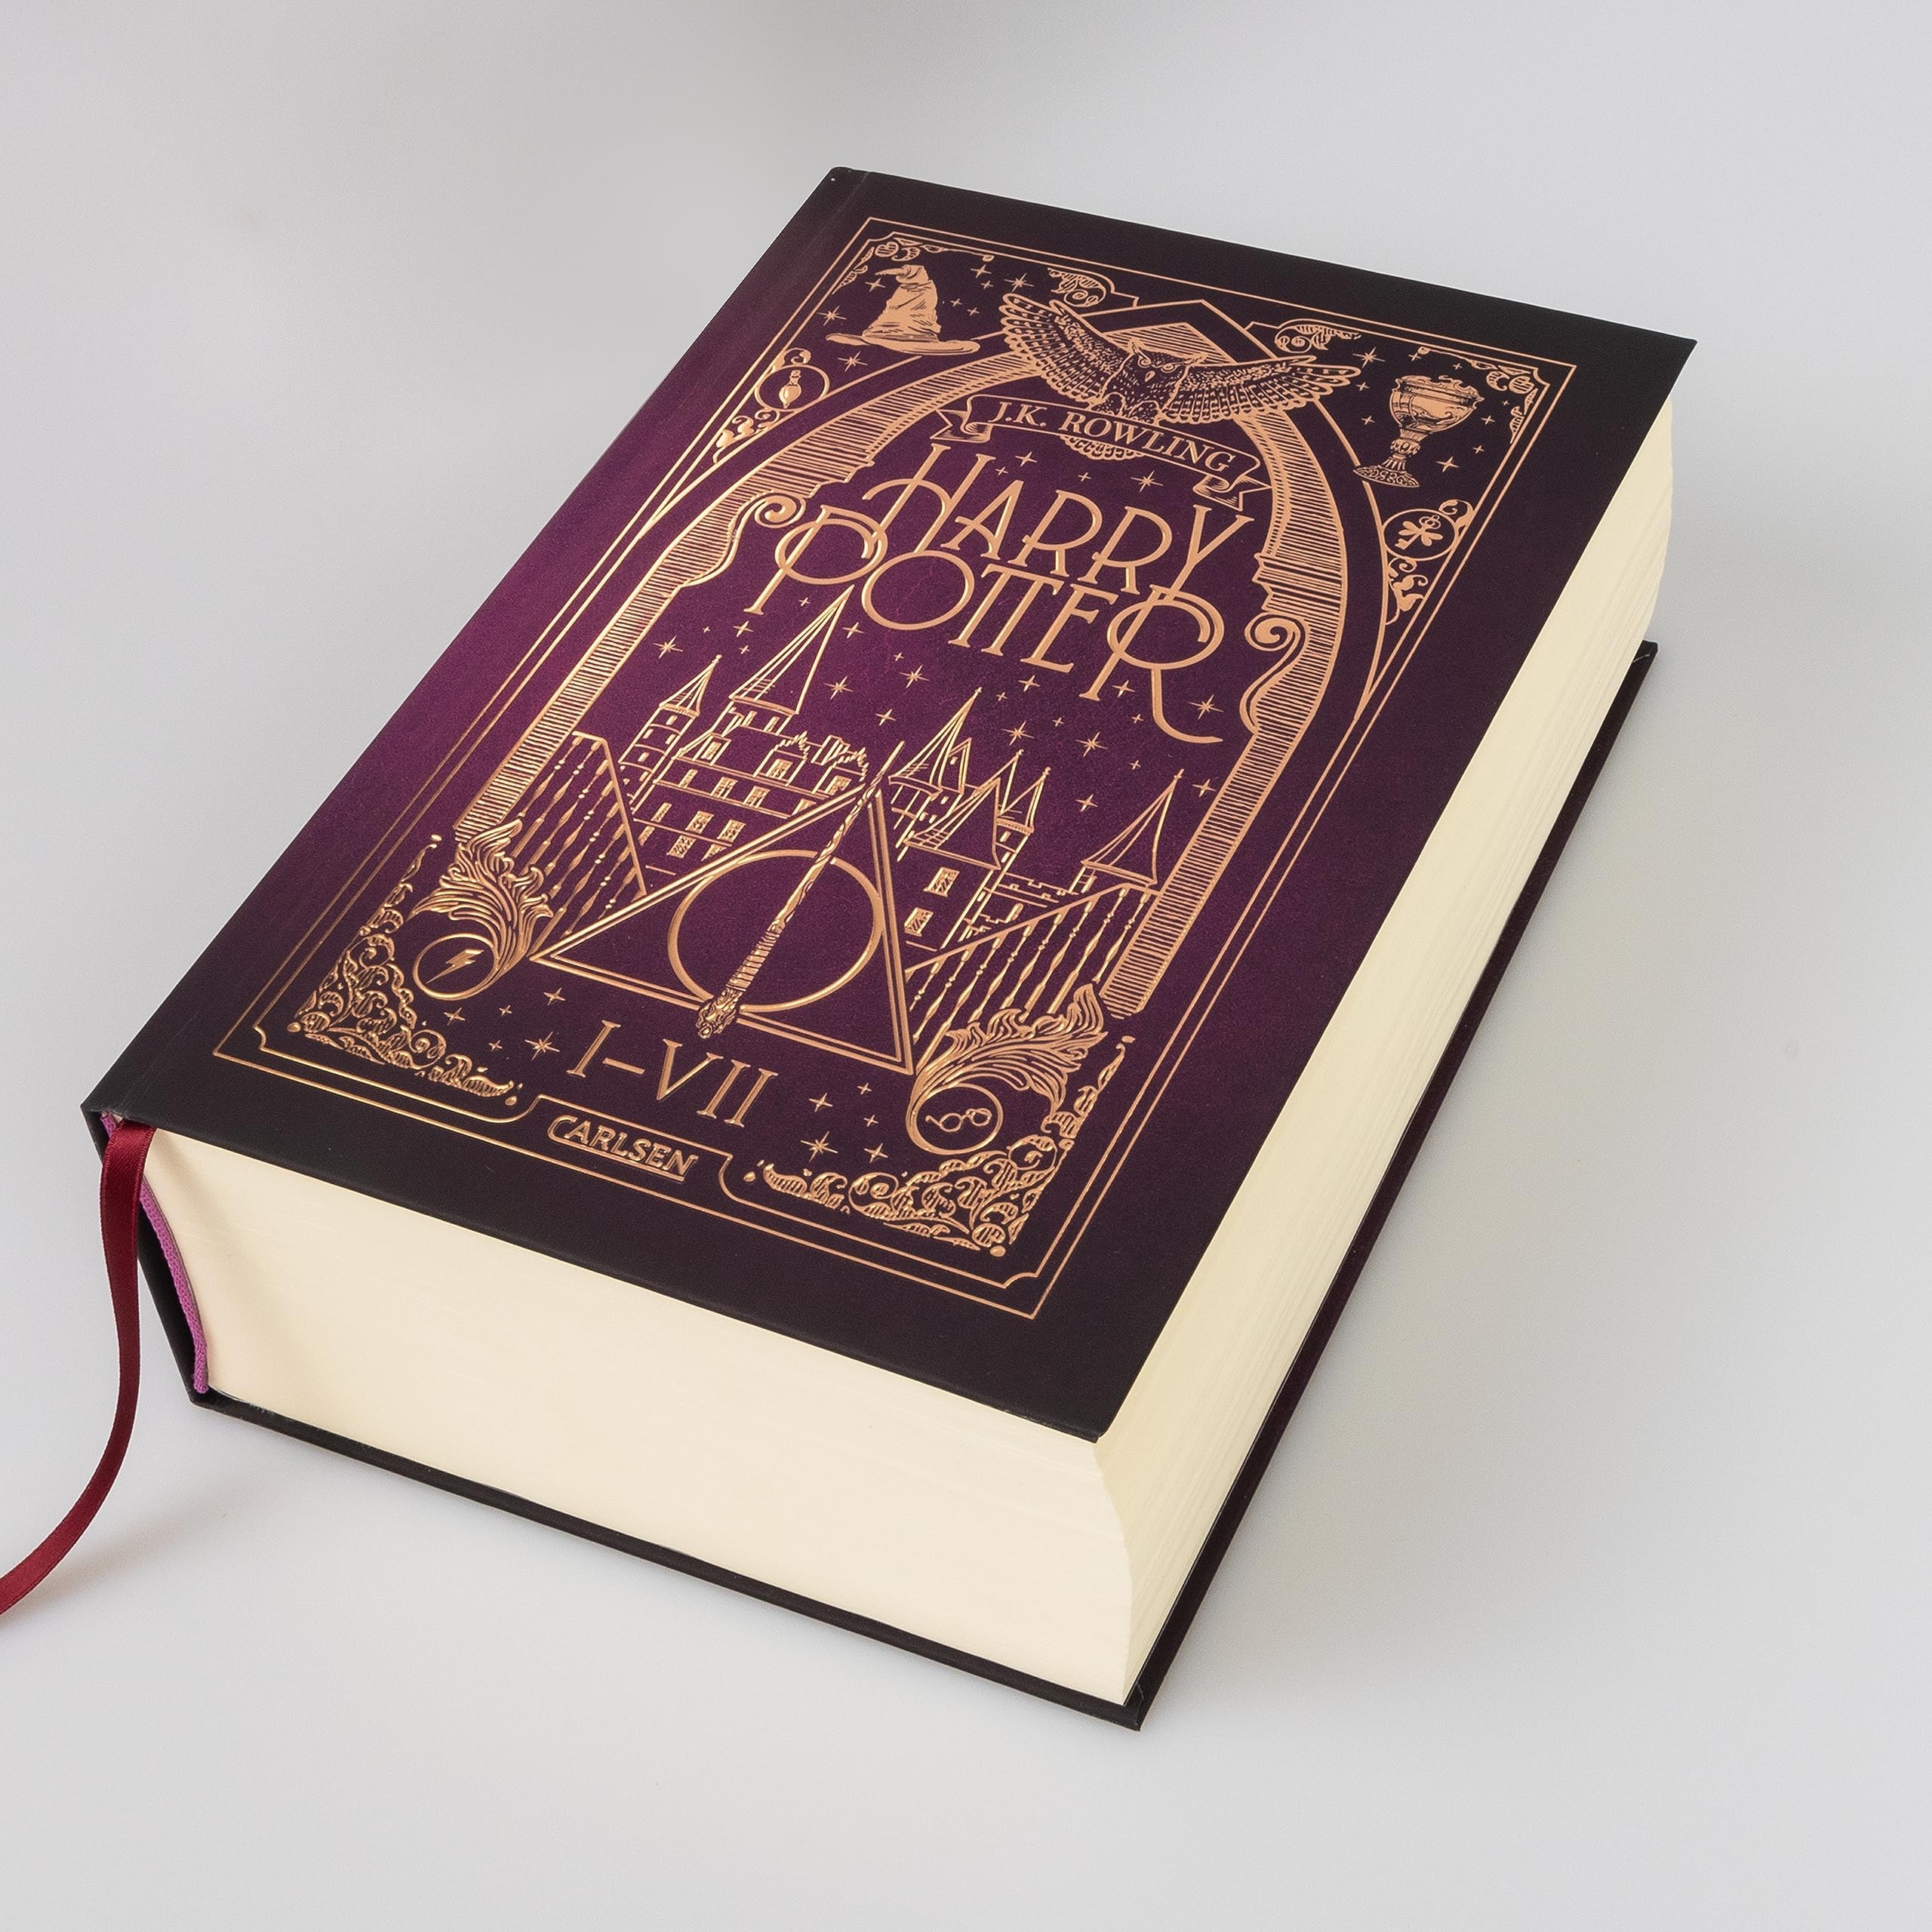 Harry Potter en ALLEMAND - Édition complète 7 tomes en 1 volume (Carlsen)